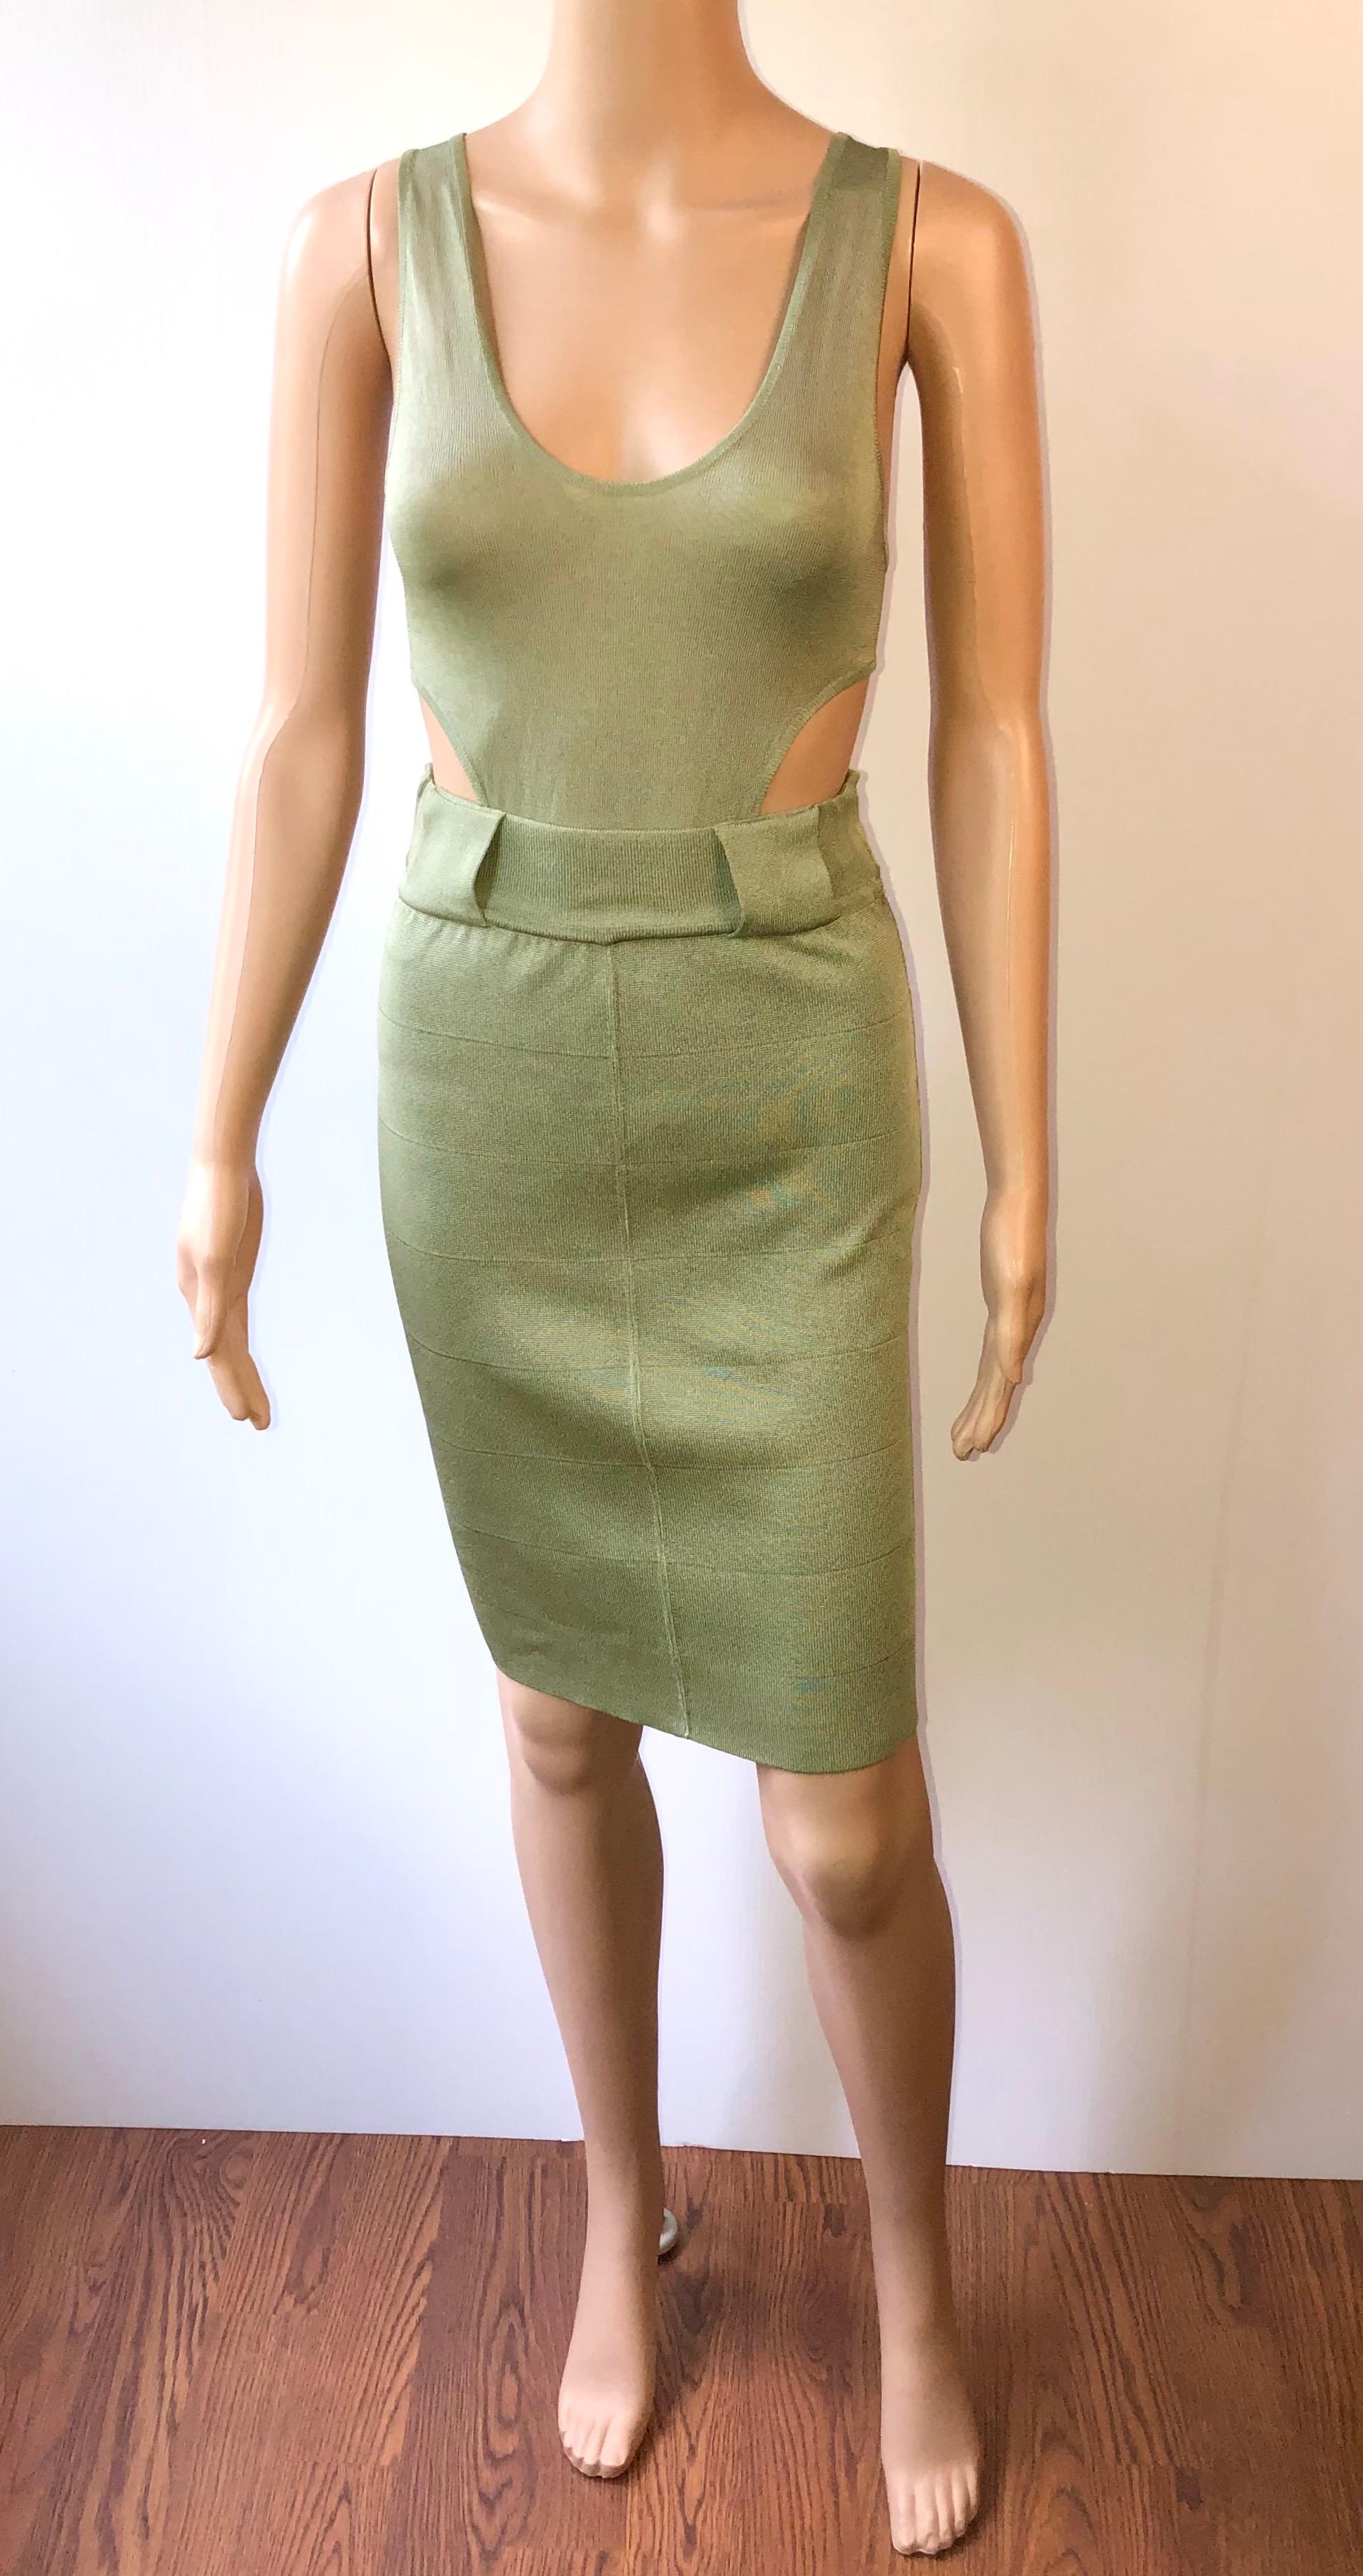 Beige Azzedine Alaia S/S 1985 Vintage Plunged Cutout Bodycon Green Dress